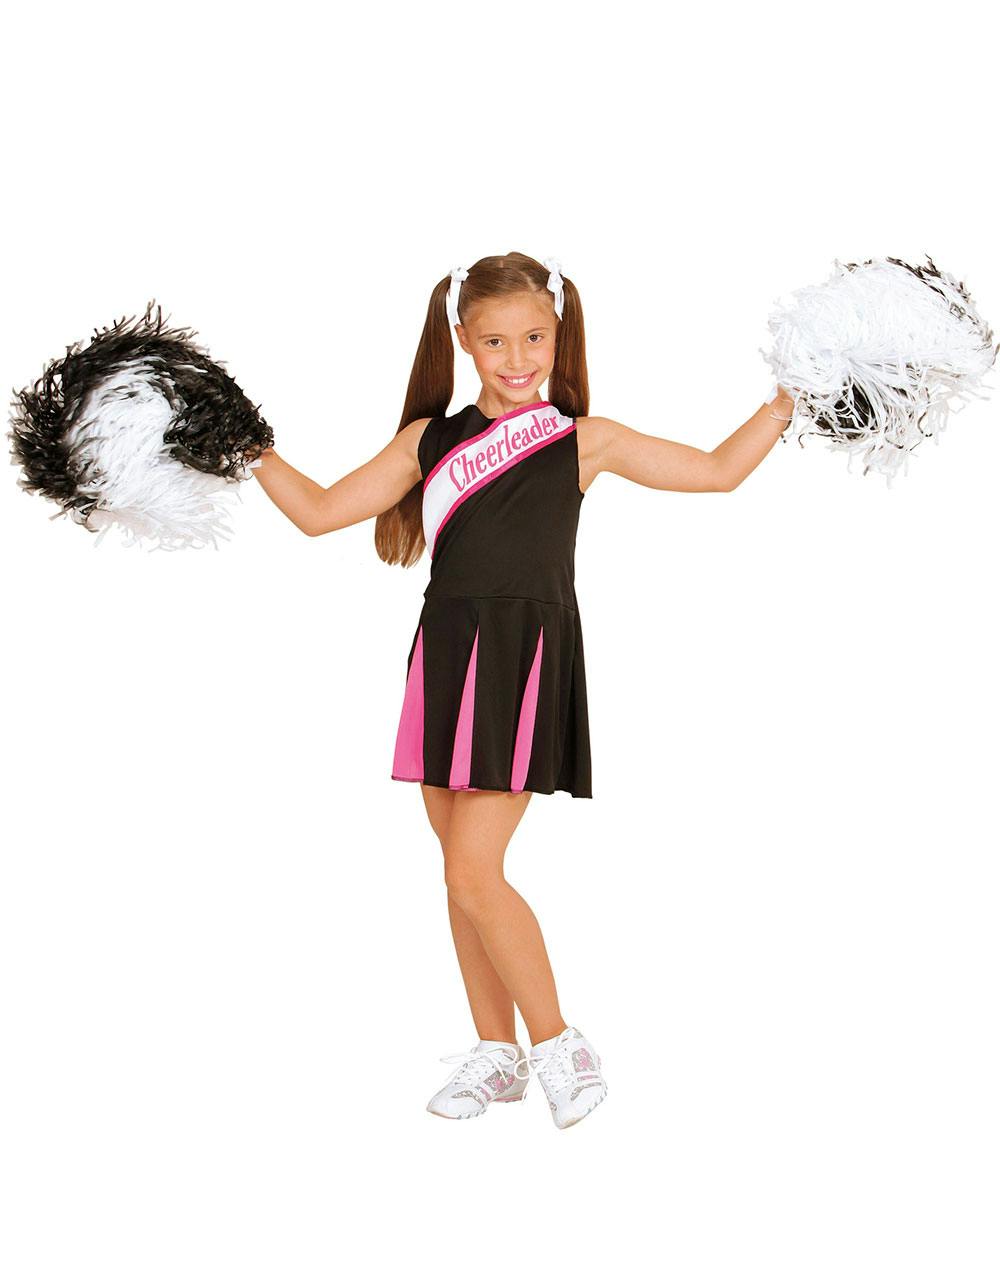 ris Lappe pære Sort Cheerleader Kostumekjole til Børn - Cheerleader - Sport - Kostumer  efter Tema - Kostumer - KARNEVAL